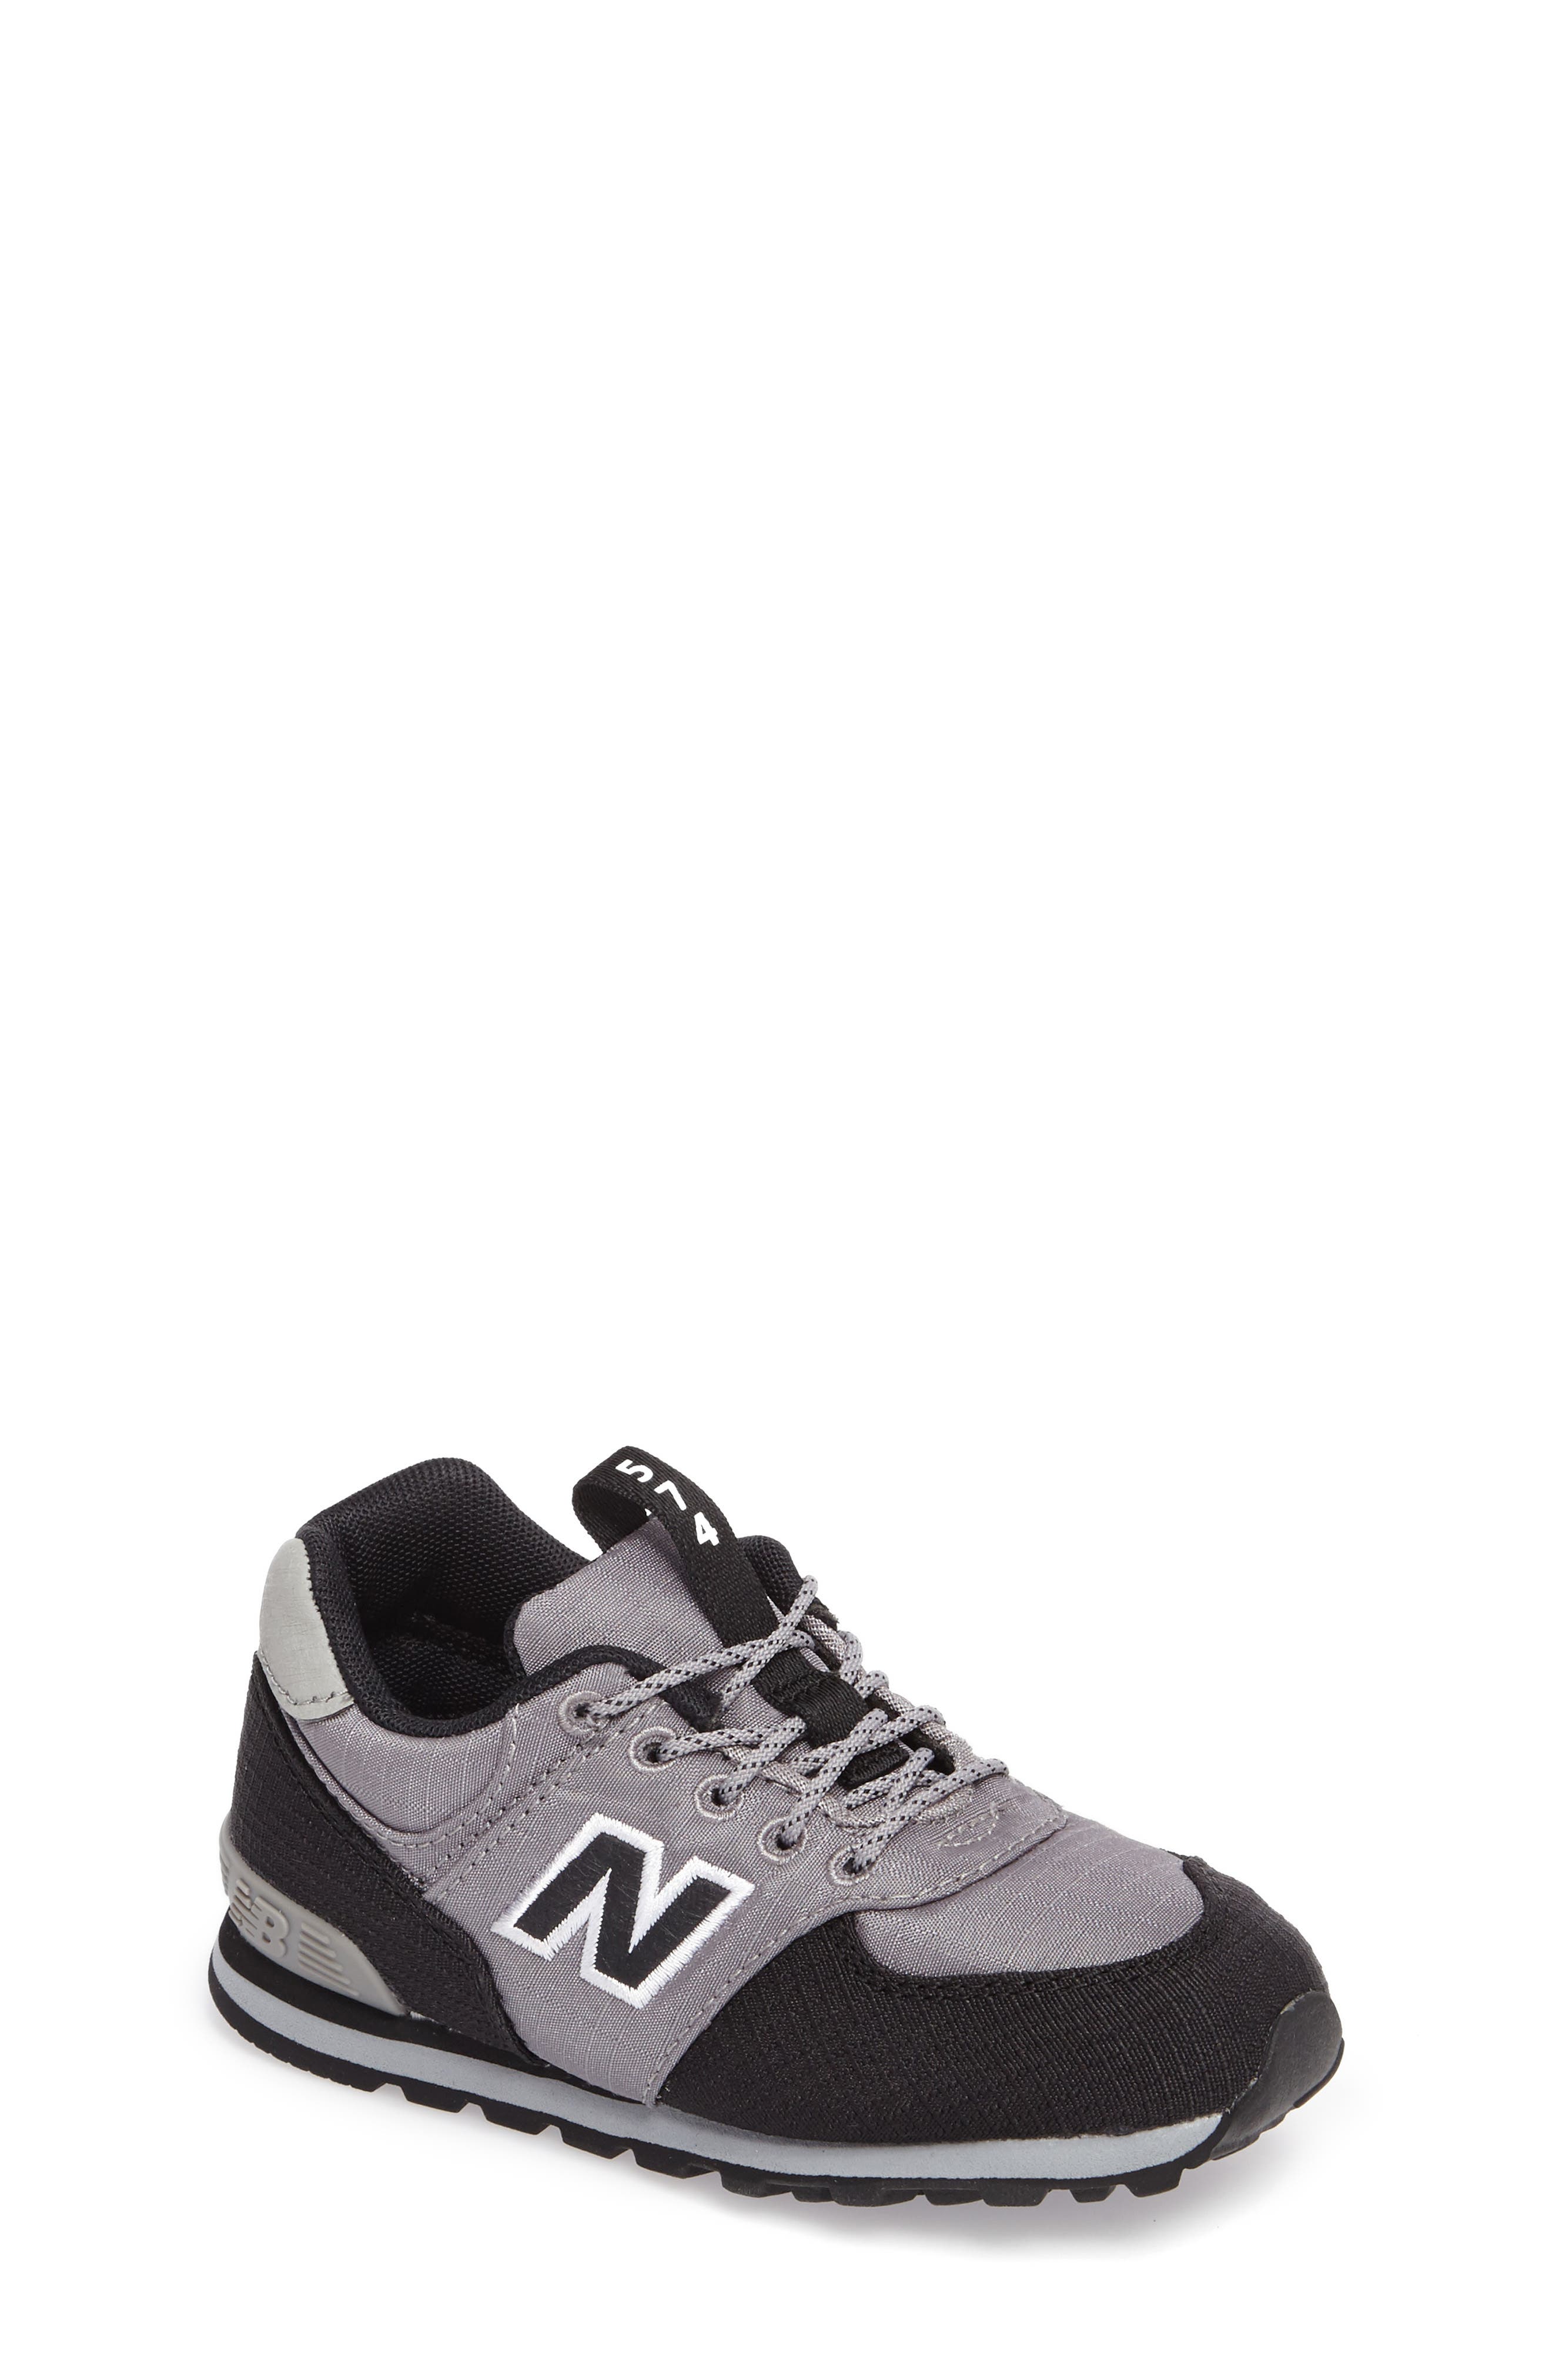 New Balance 990 Sneaker (Baby, Walker \u0026 Toddler)